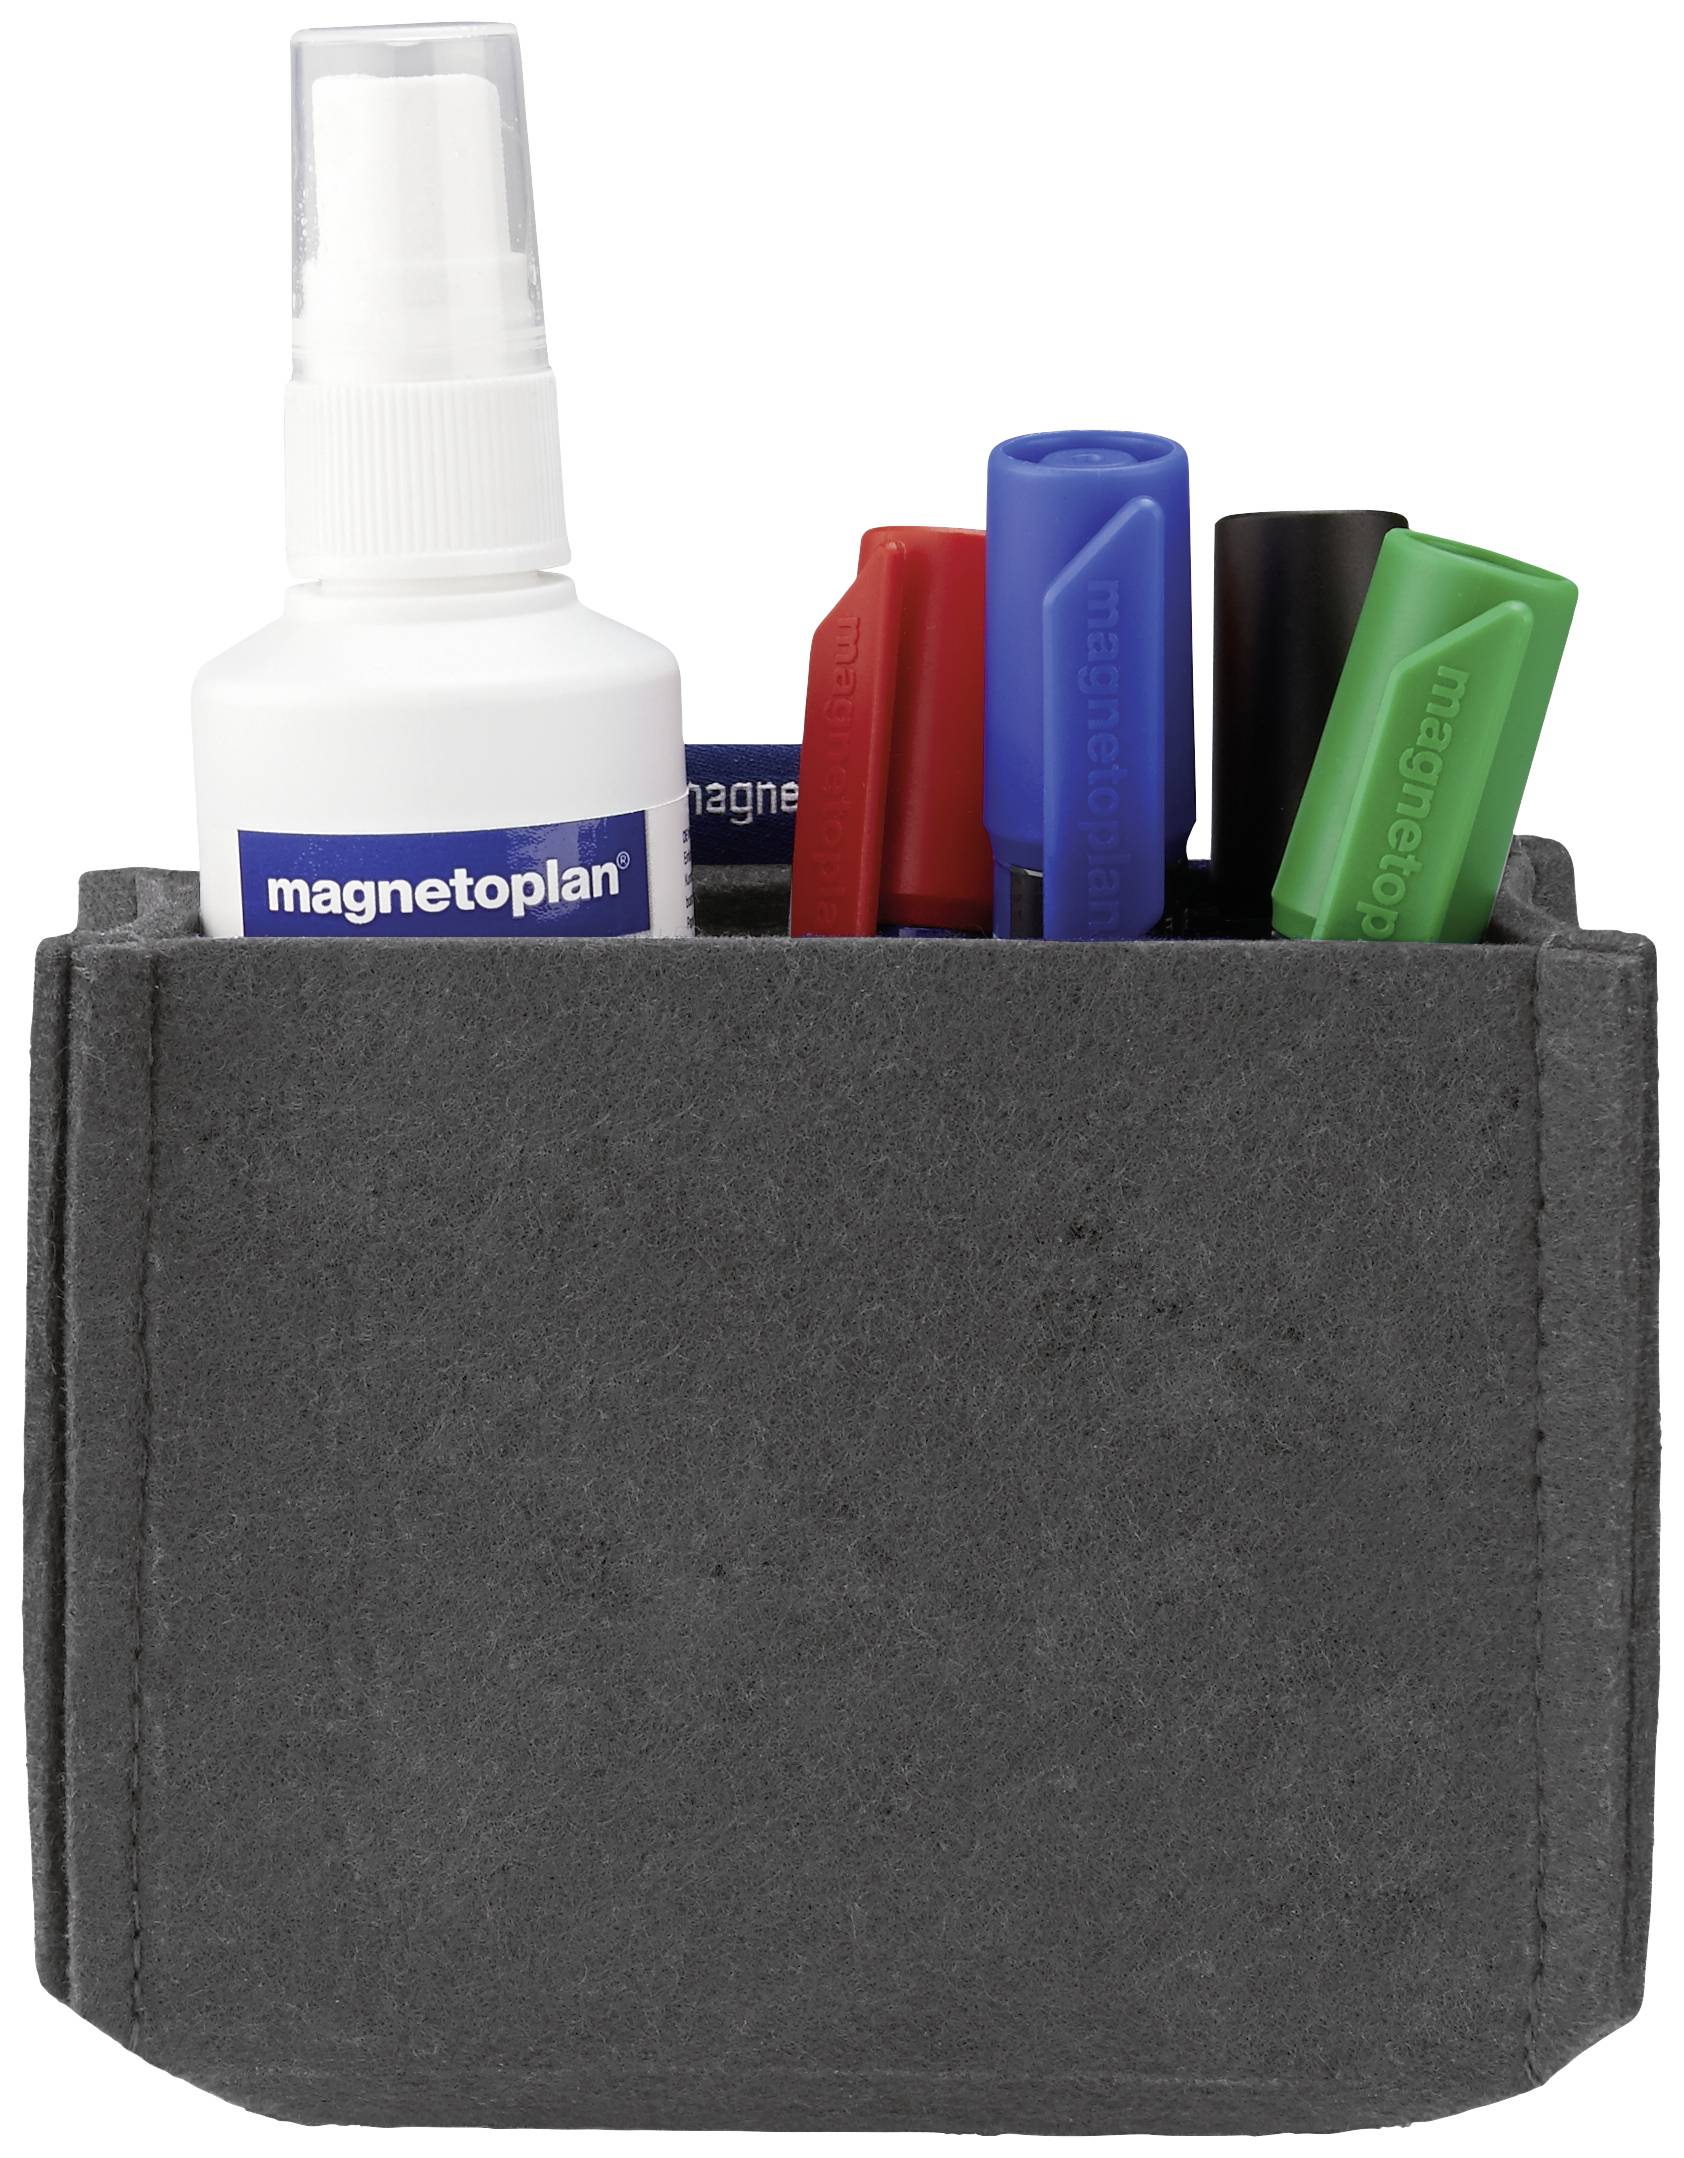 MAGNETOPLAN Stifteköcher magnetoTray, medium, grau aus Filz, hergestellt aus 100% recycelten PET-Fla